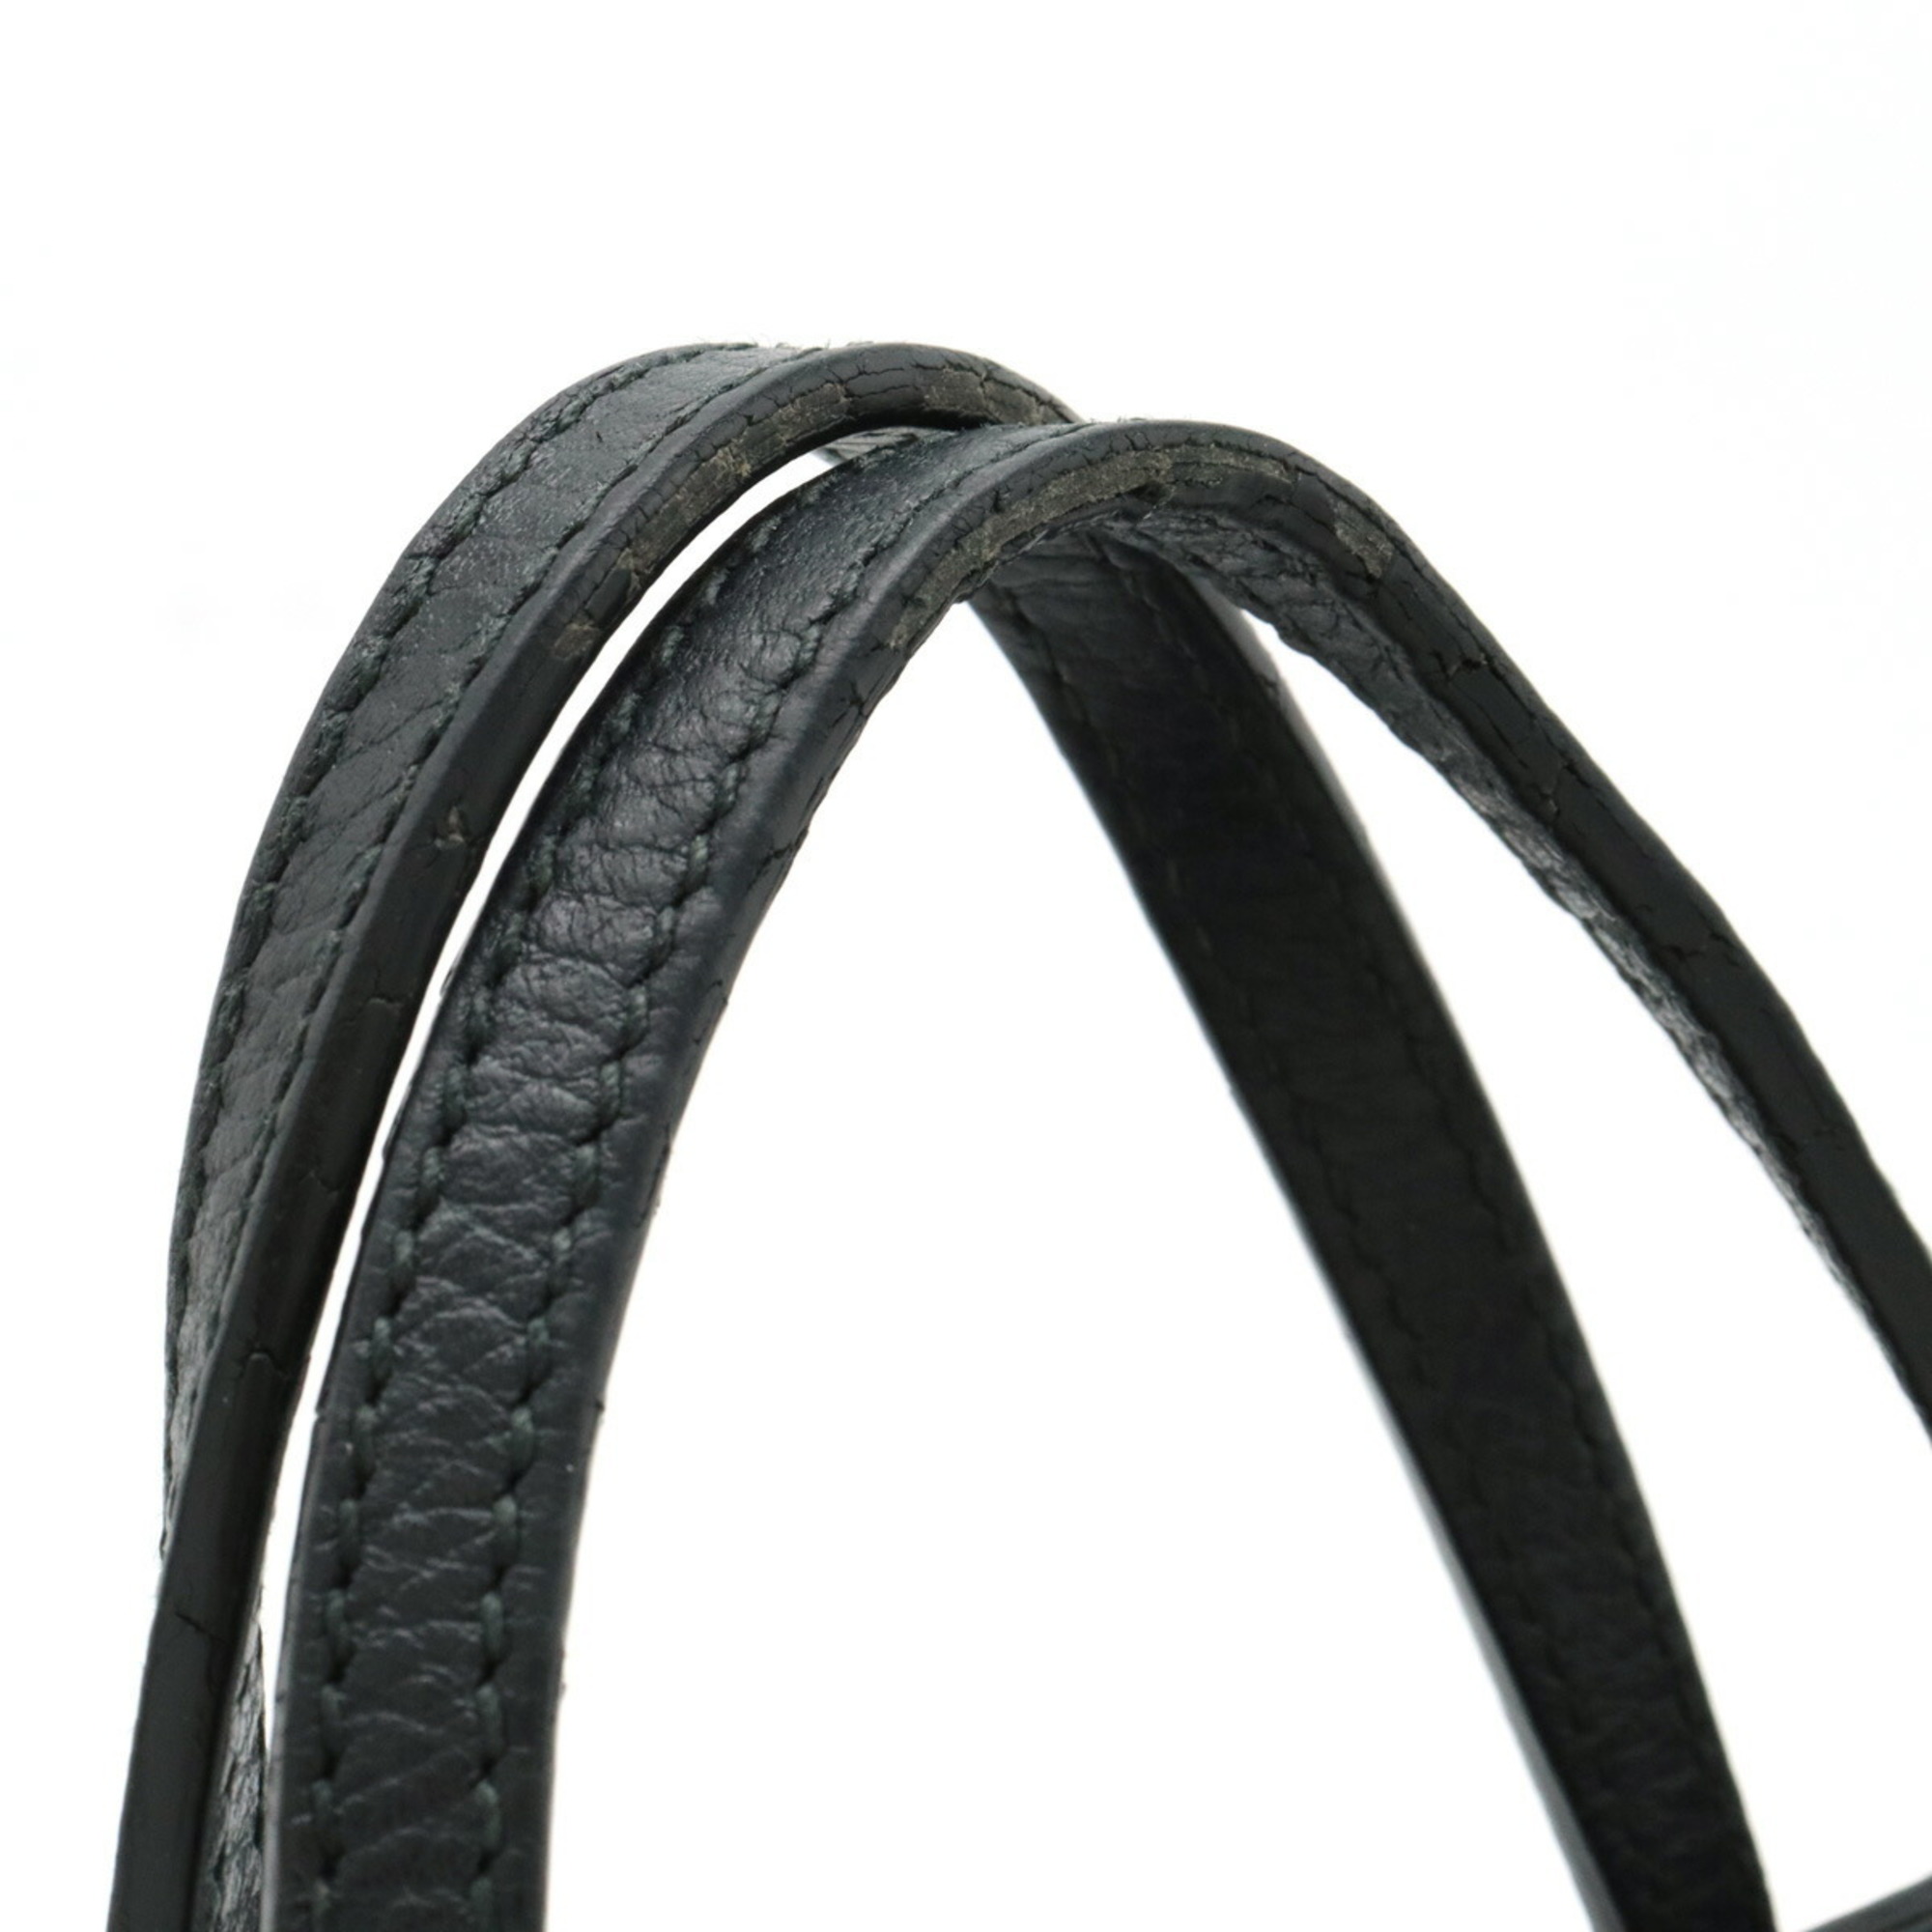 GUCCI Swing Bag Handbag Leather Black 368827